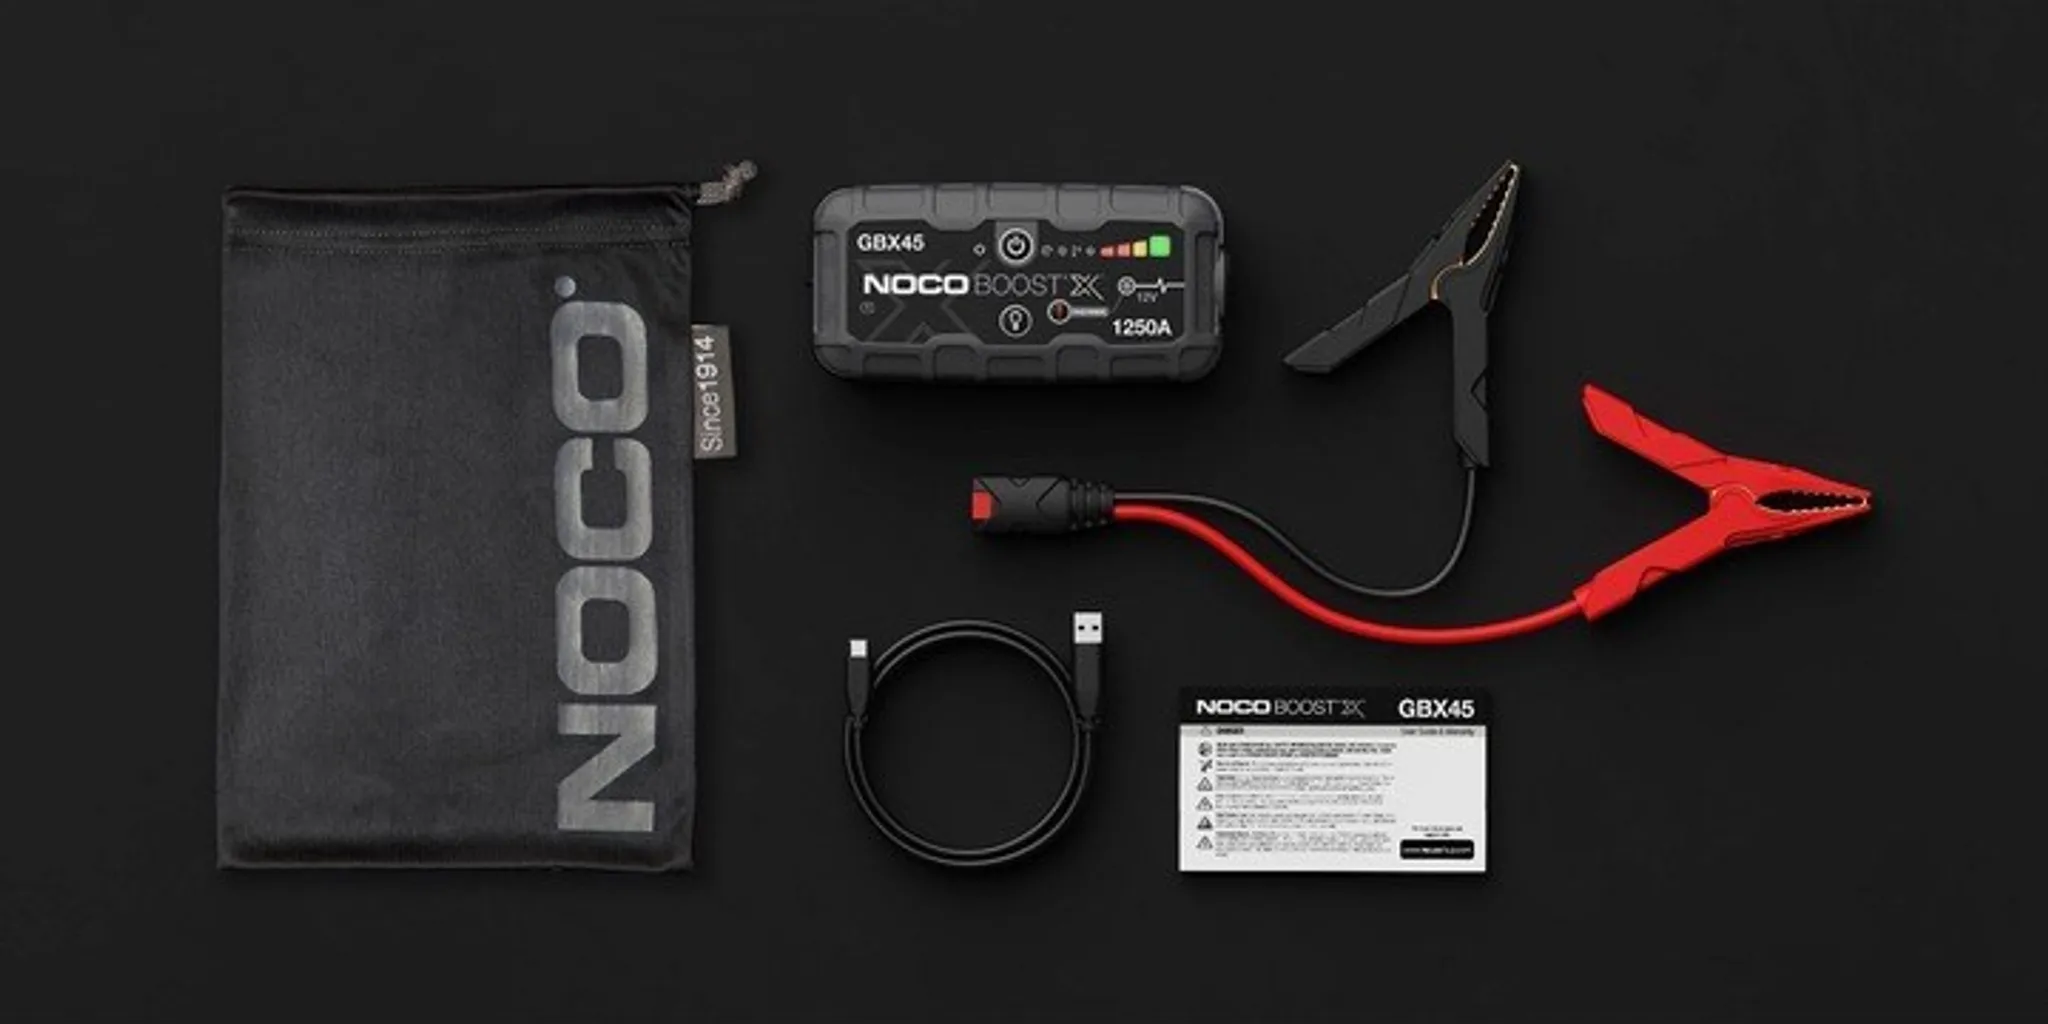 NOCO Boost XL GB50 1500A 12V Booster Batterie Vo…